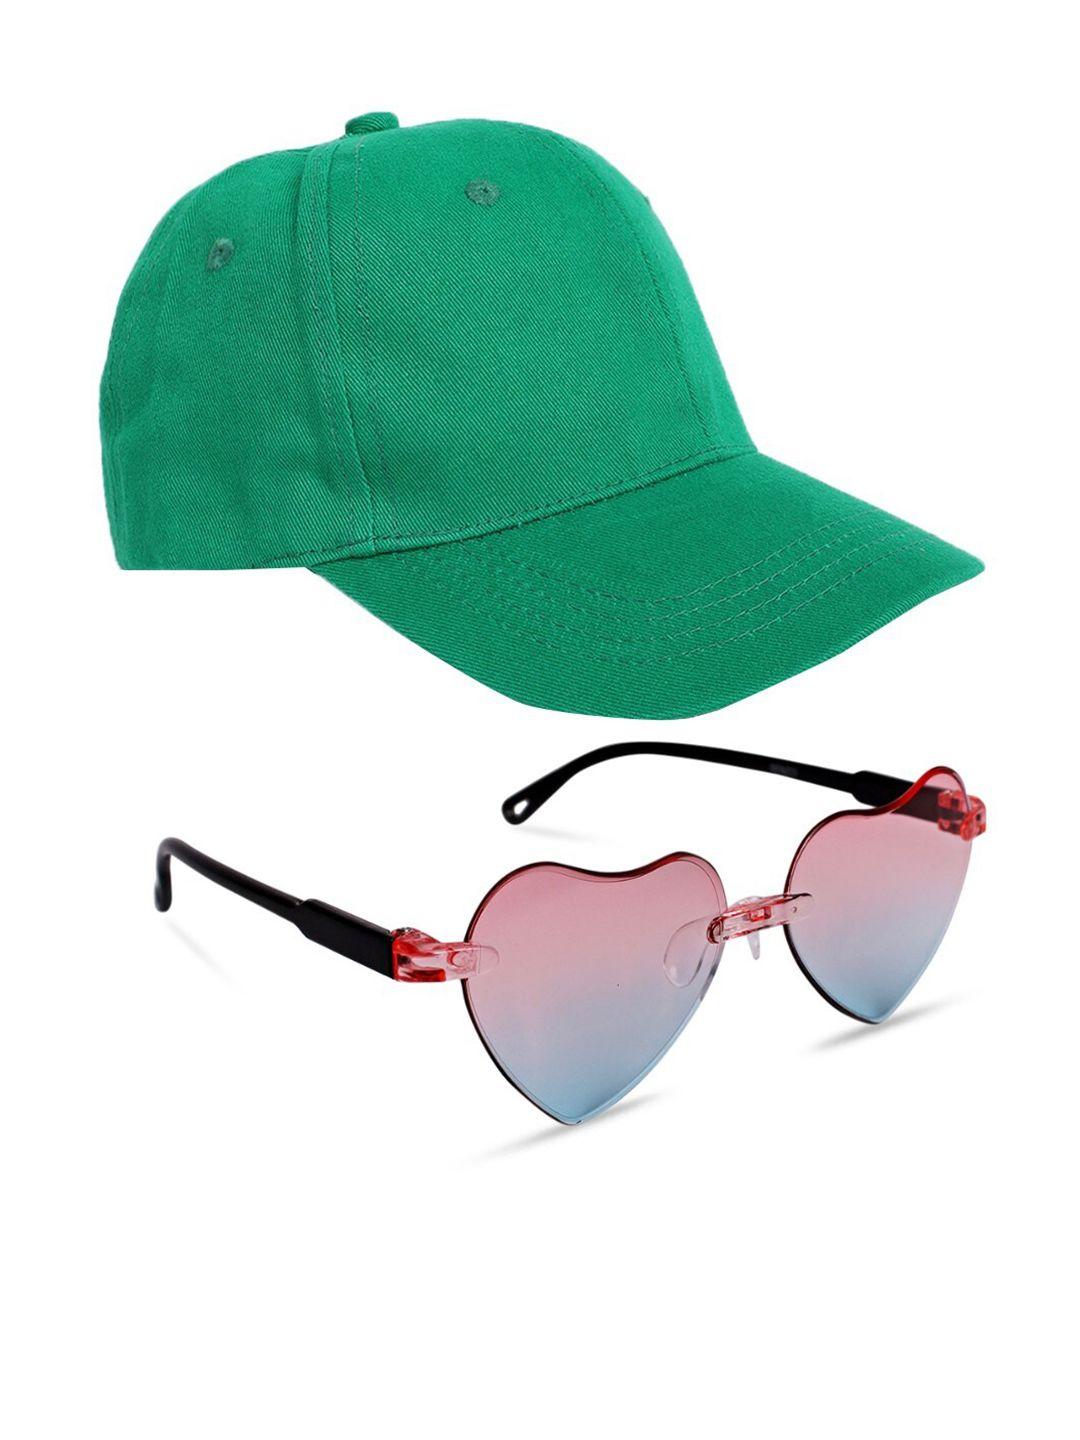 dukiekooky kids baseball cap with sunglasses